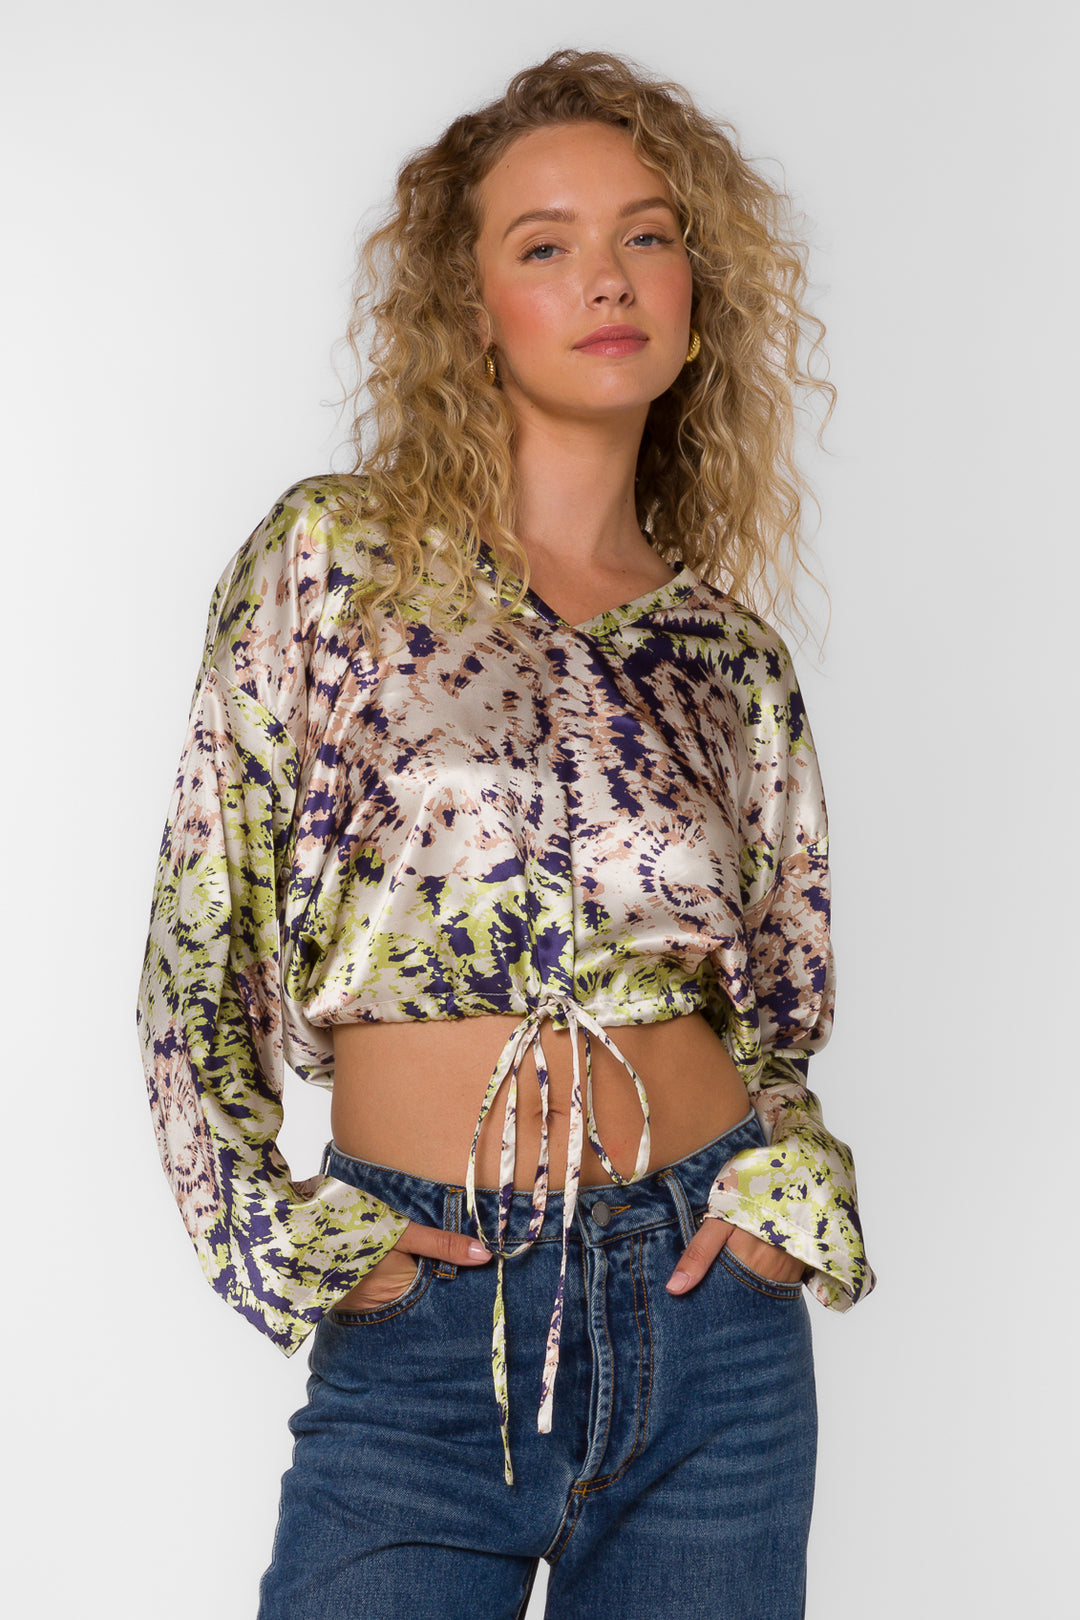 Sadona Purple Multi Tie Dye Blouse - Tops - Velvet Heart Clothing